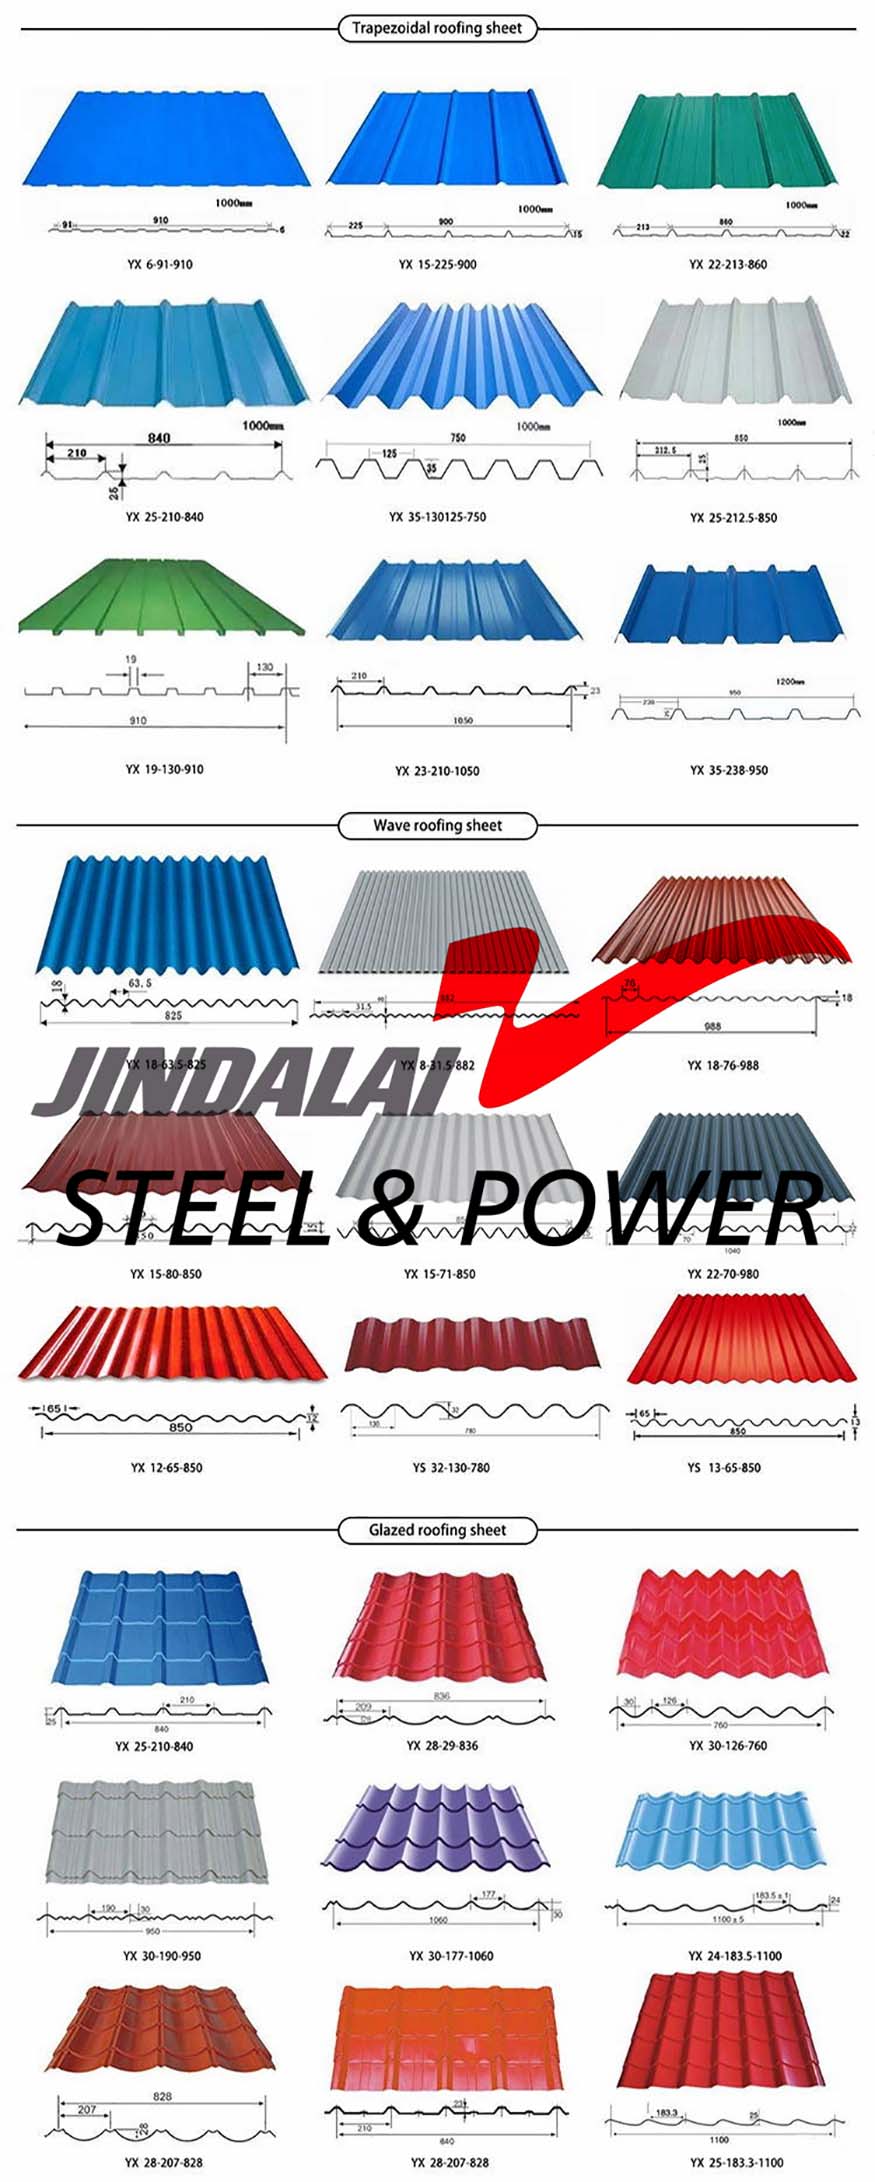 jindalaisteel-ppgi-ppgl metal roofing sheets (7)